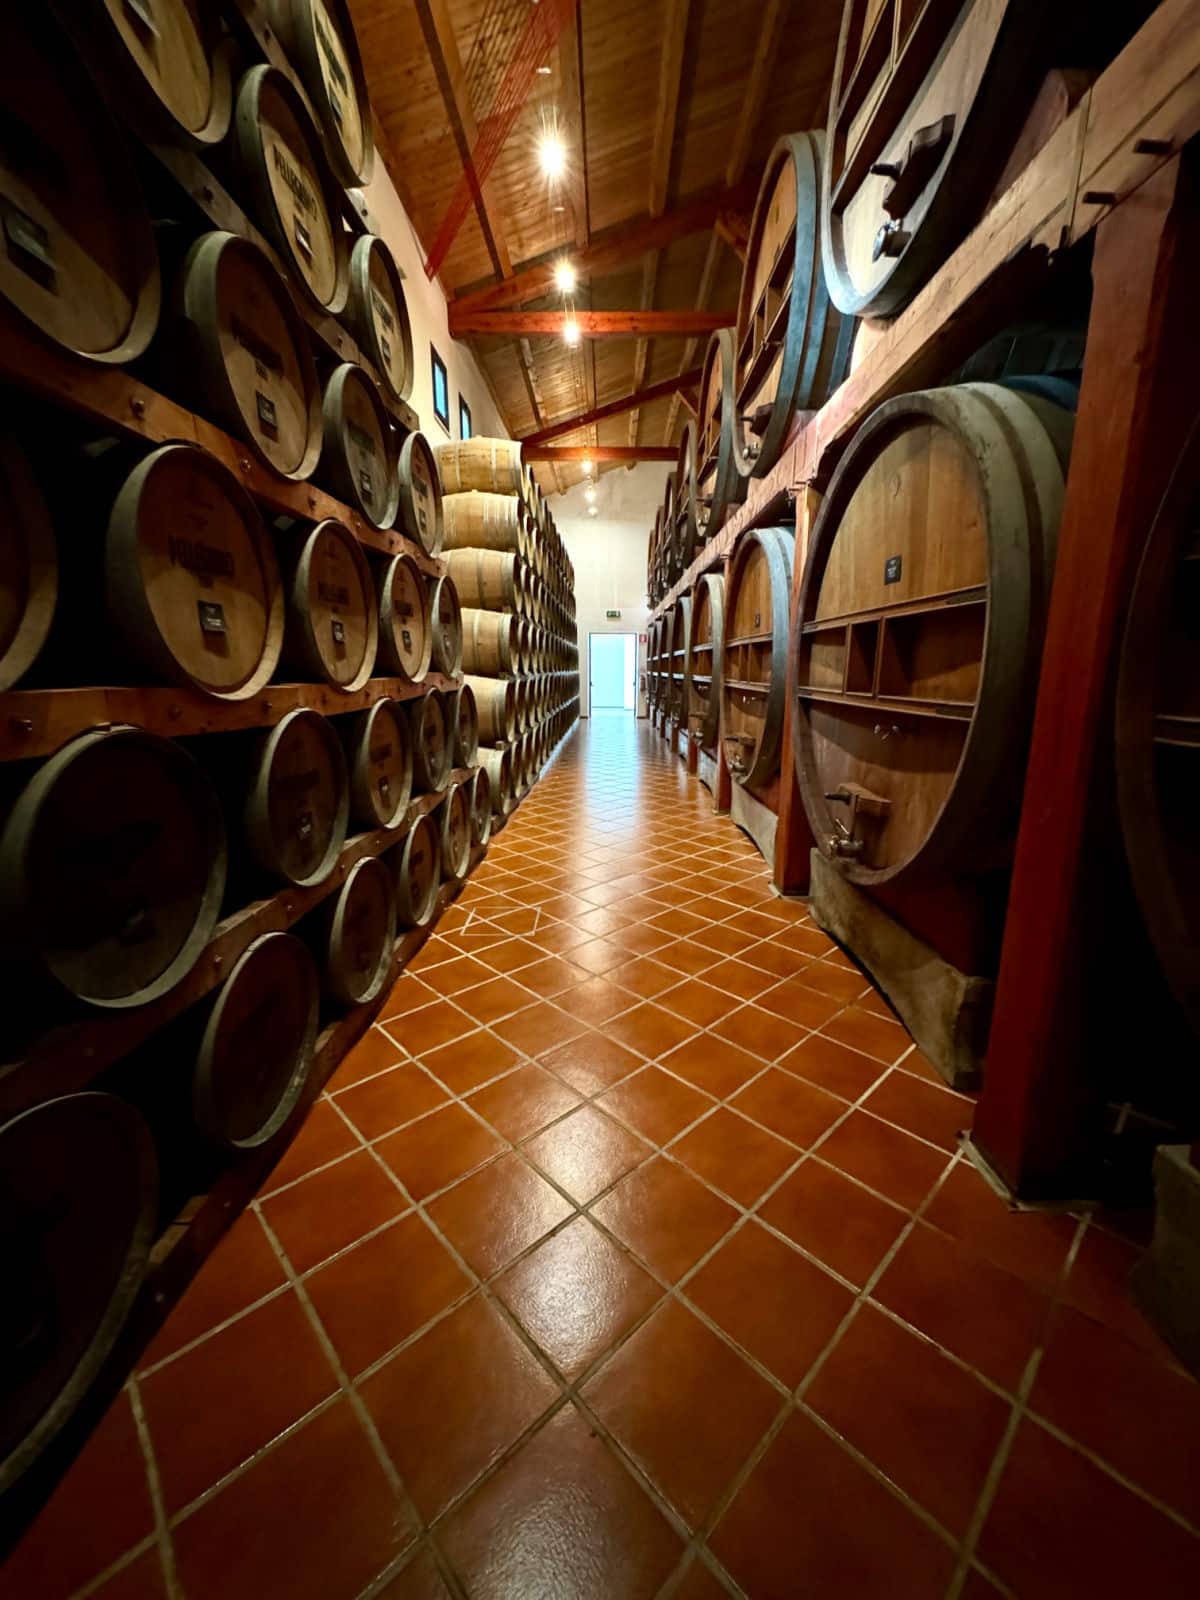 Pellegrino wine barrels.